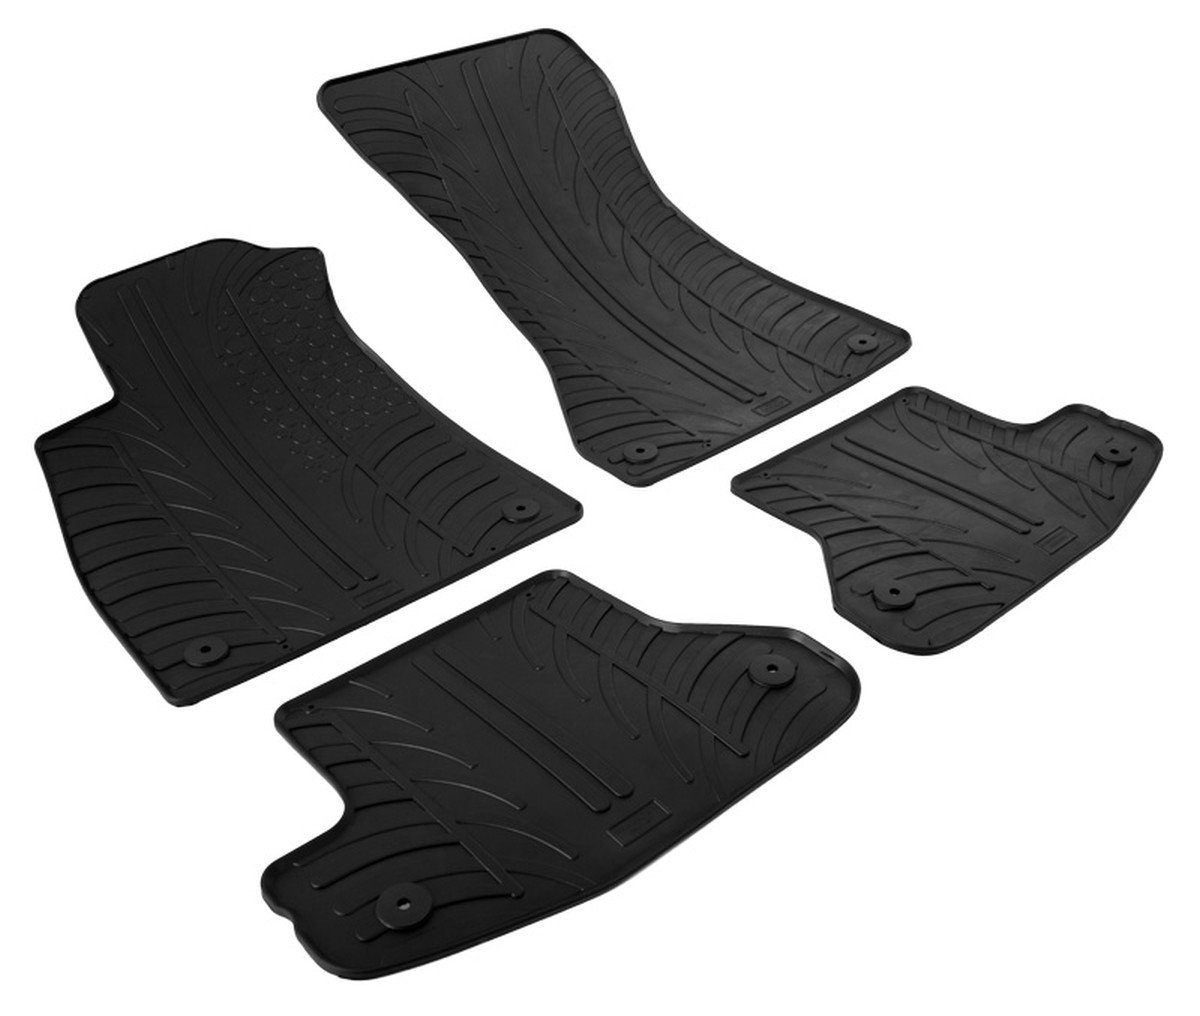 AZUGA Auto-Fußmatten Gummi-Fußmatten passend für Audi A5 Coupé ab 8/2016, für Audi A5 Coupé 2-türer